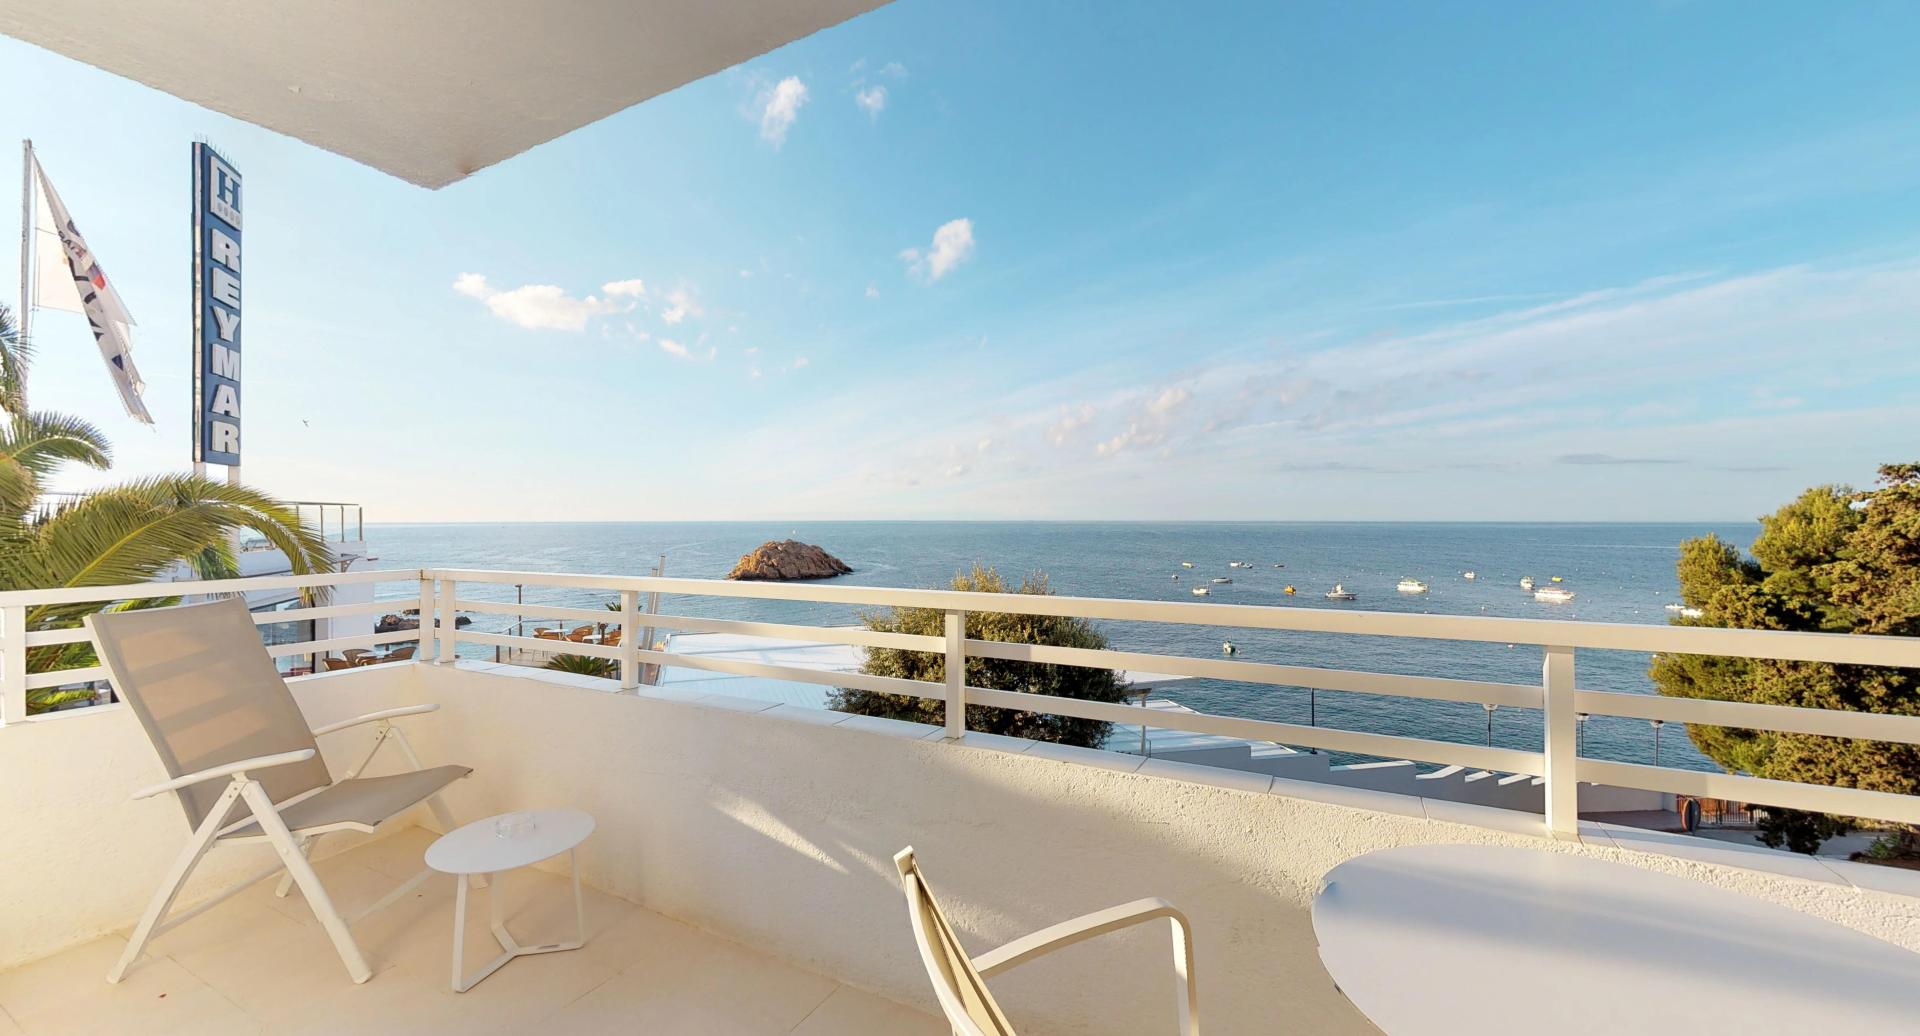 Enjoy a luxury holiday <br/> on the Costa Brava